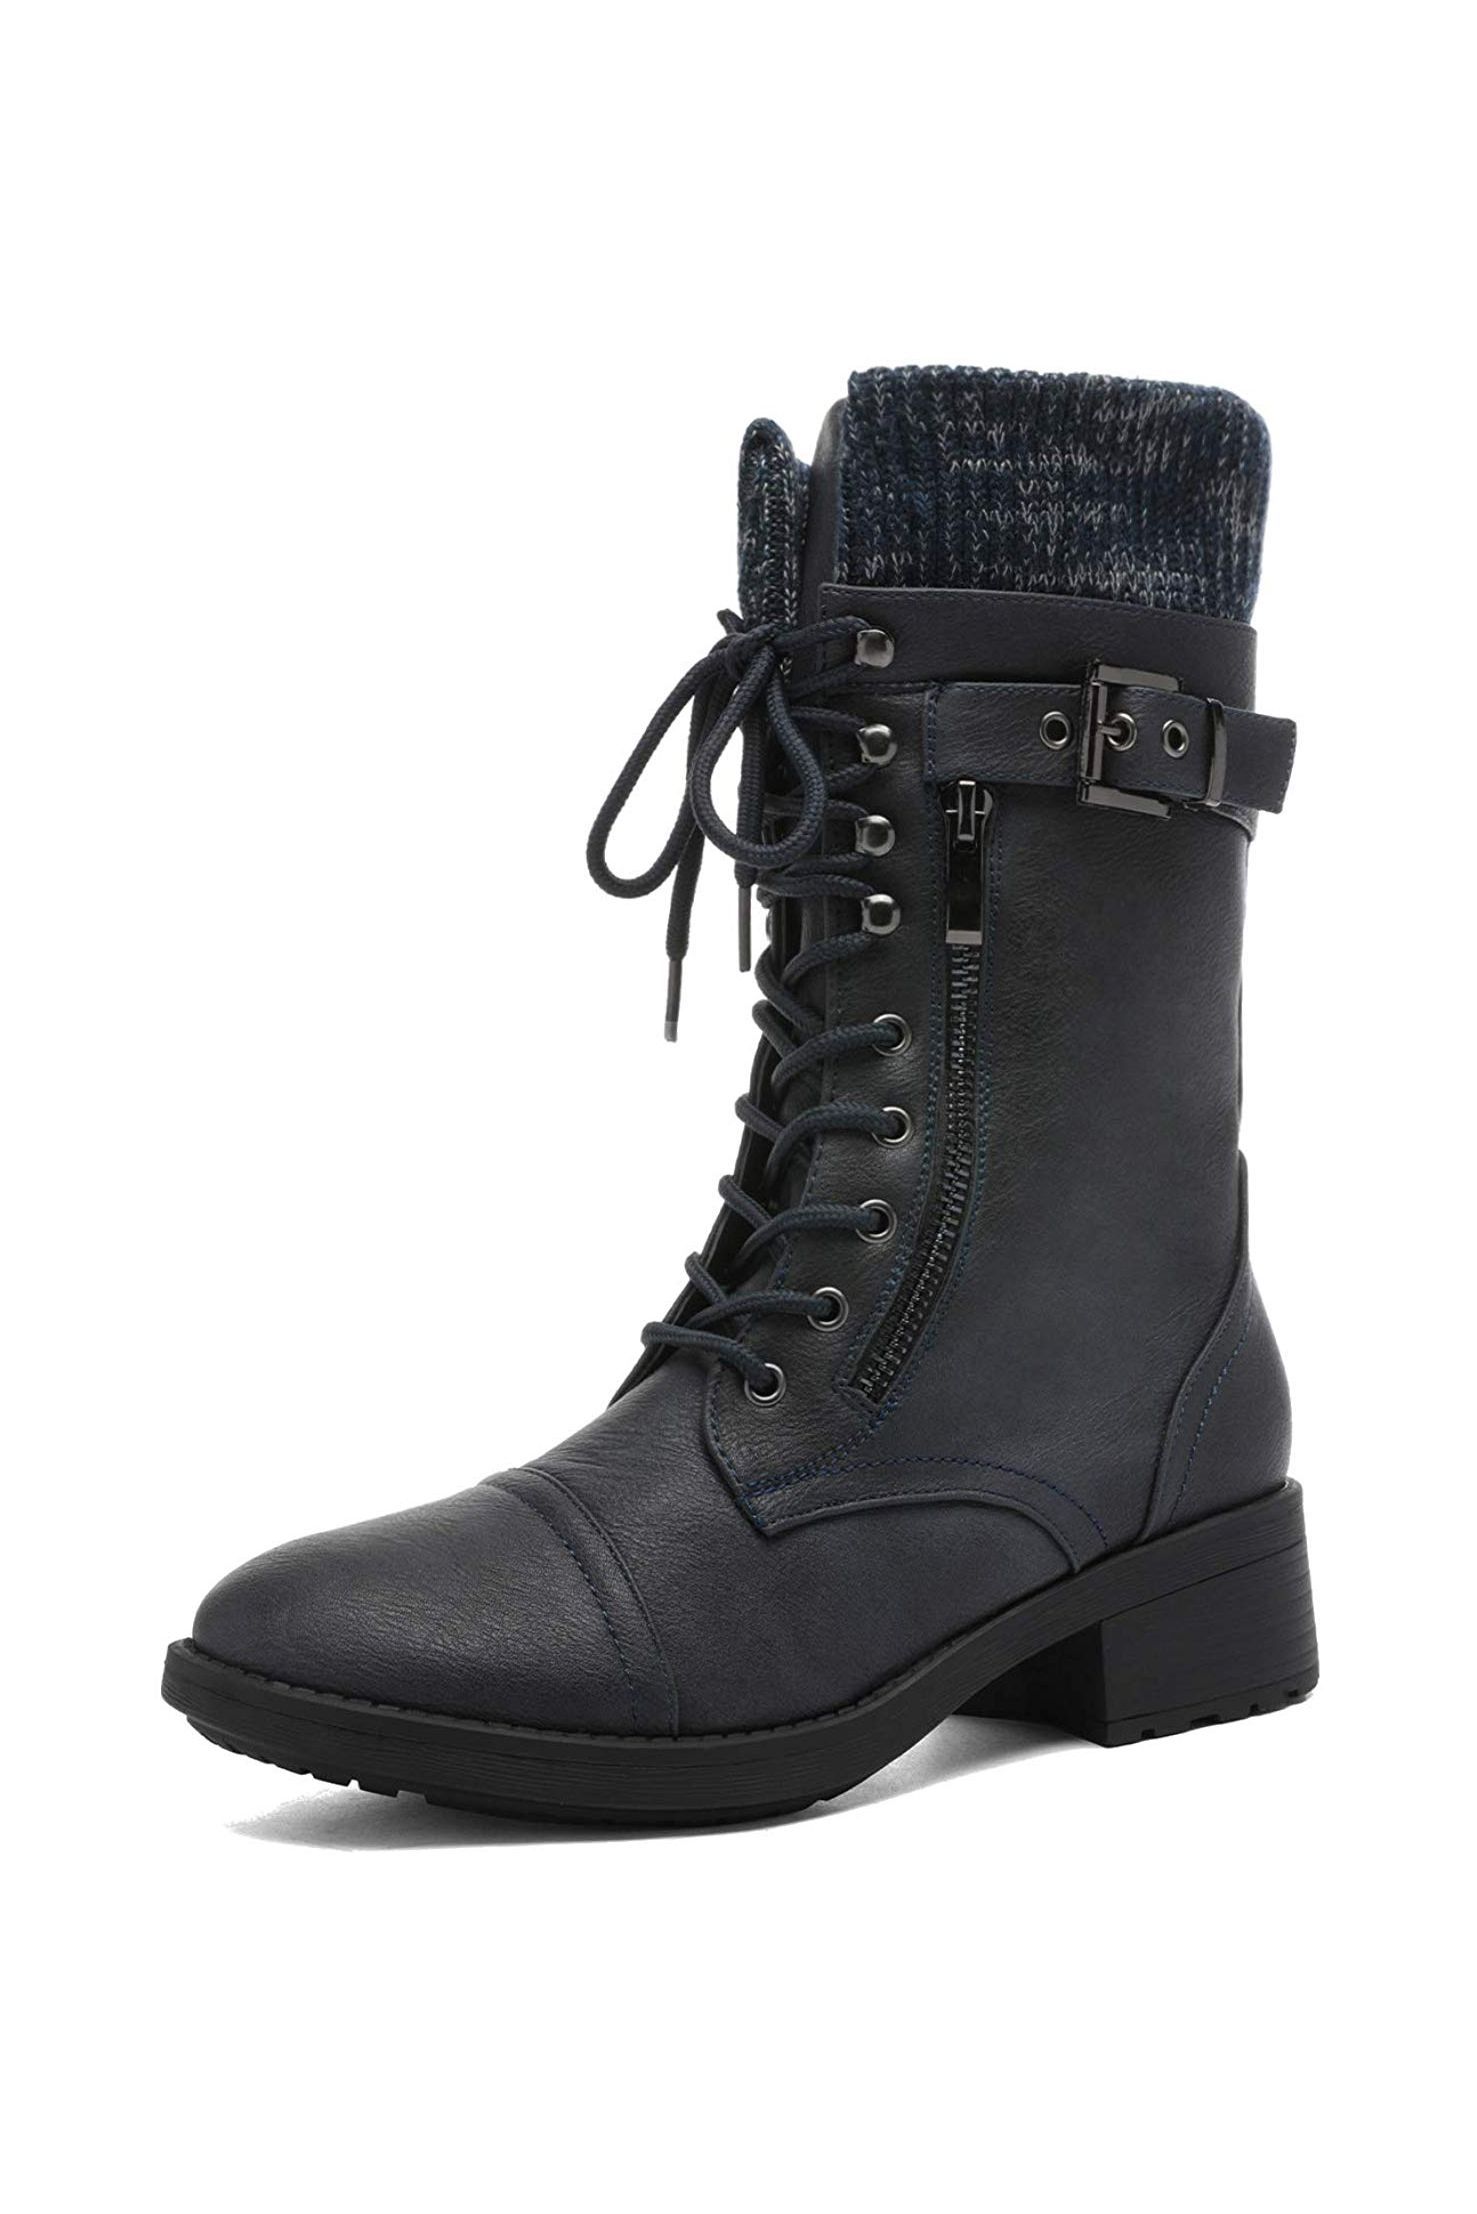 womens boots amazon